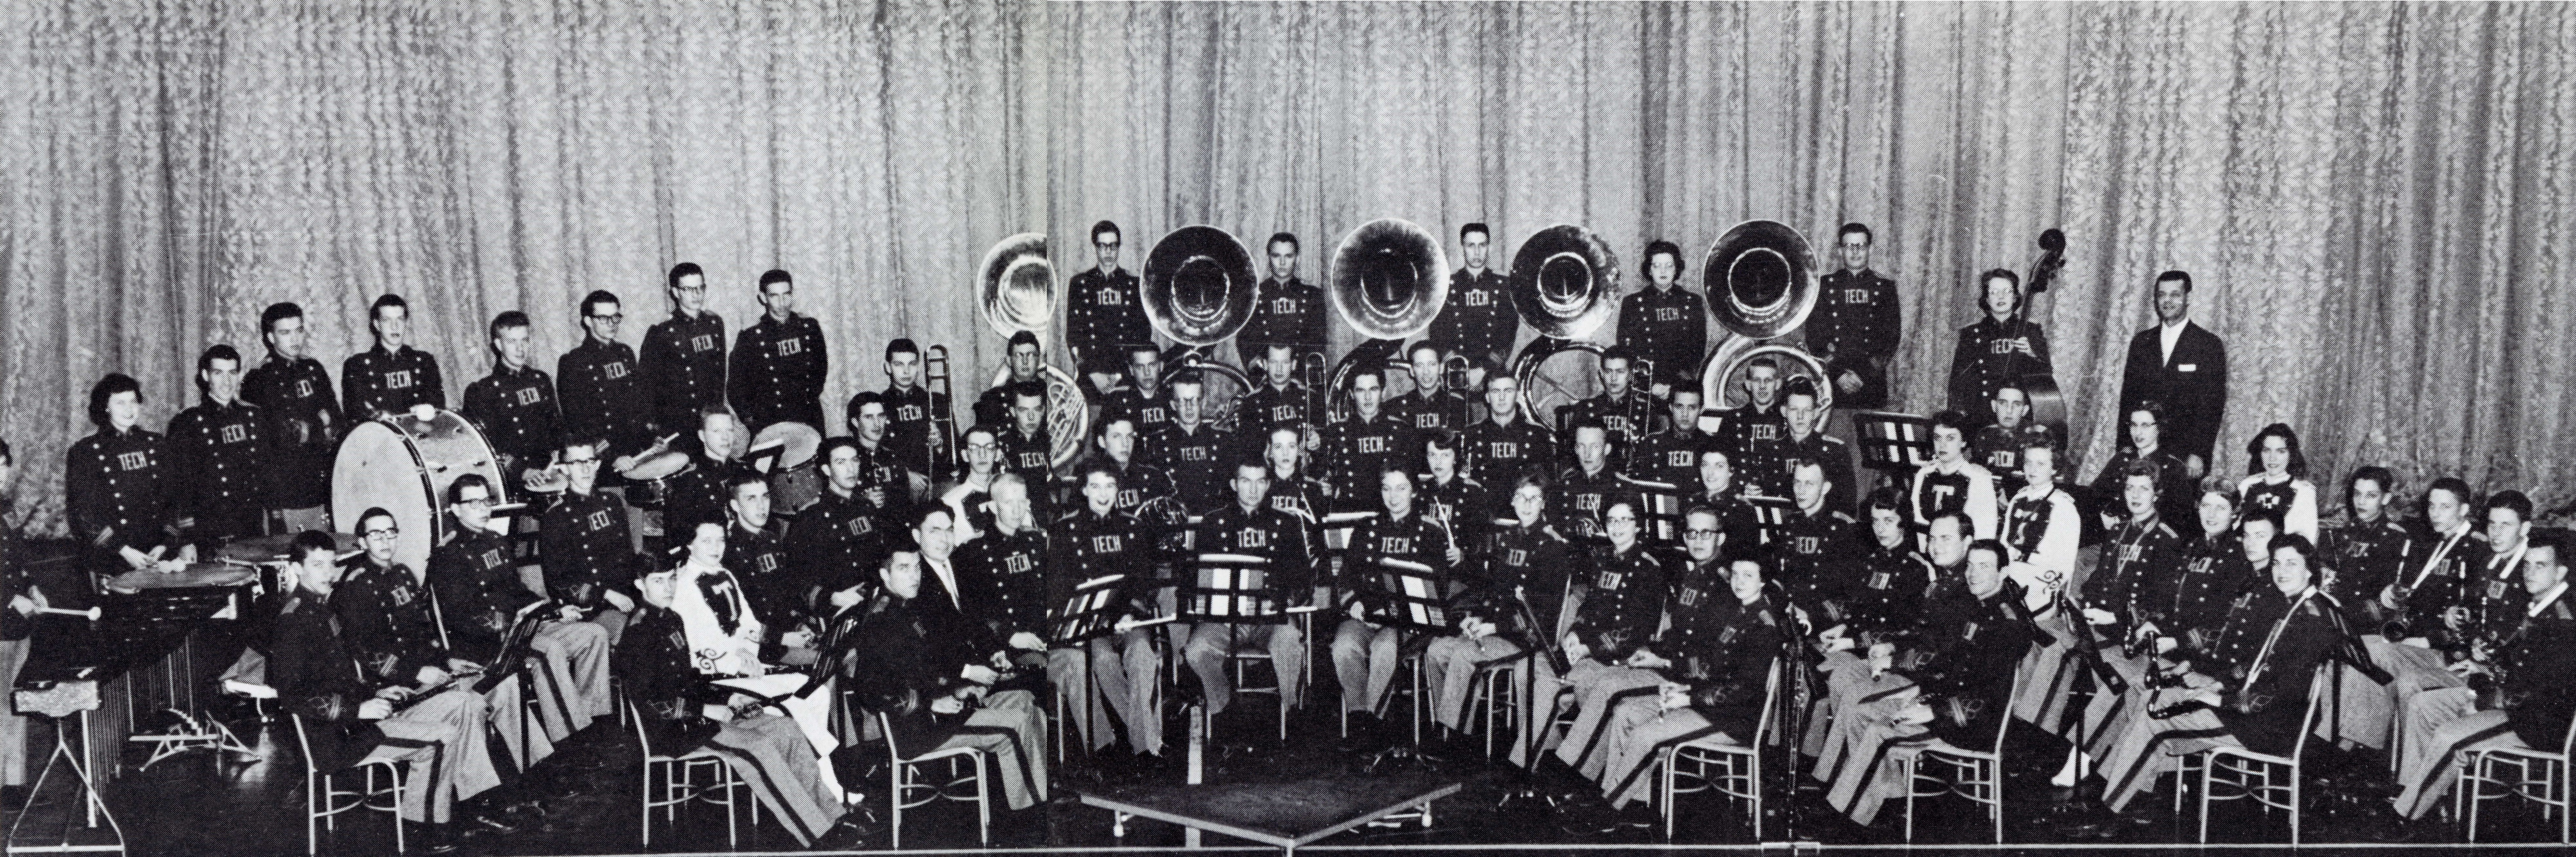 1959 Arkansas Tech Concert Band Tour